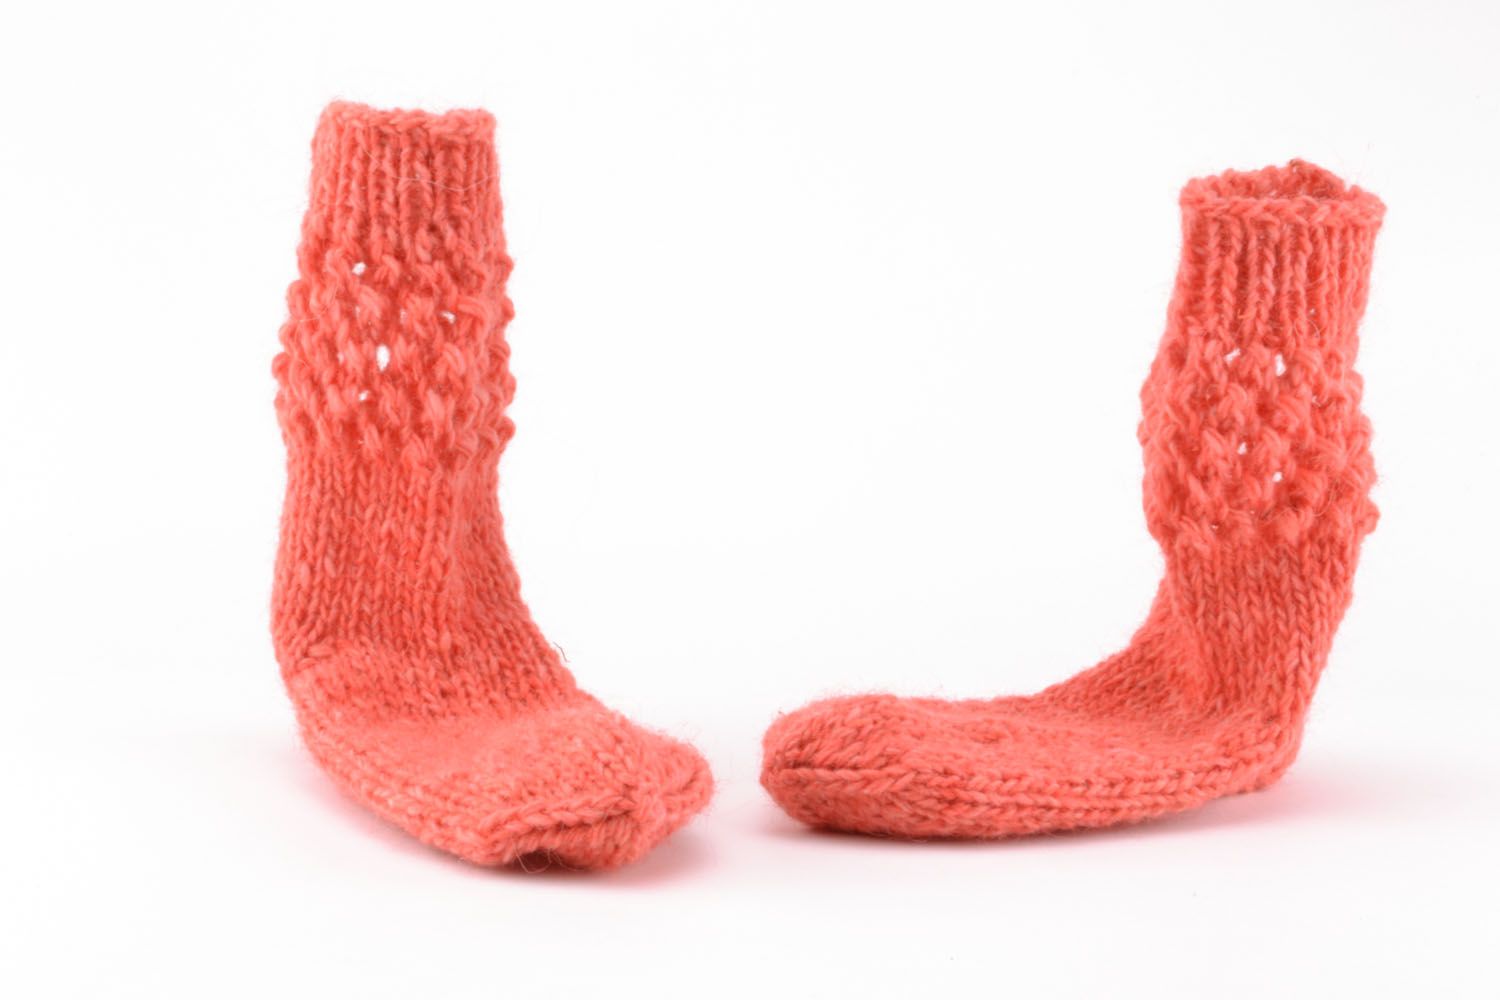 Rosa Socken aus Wolle foto 4